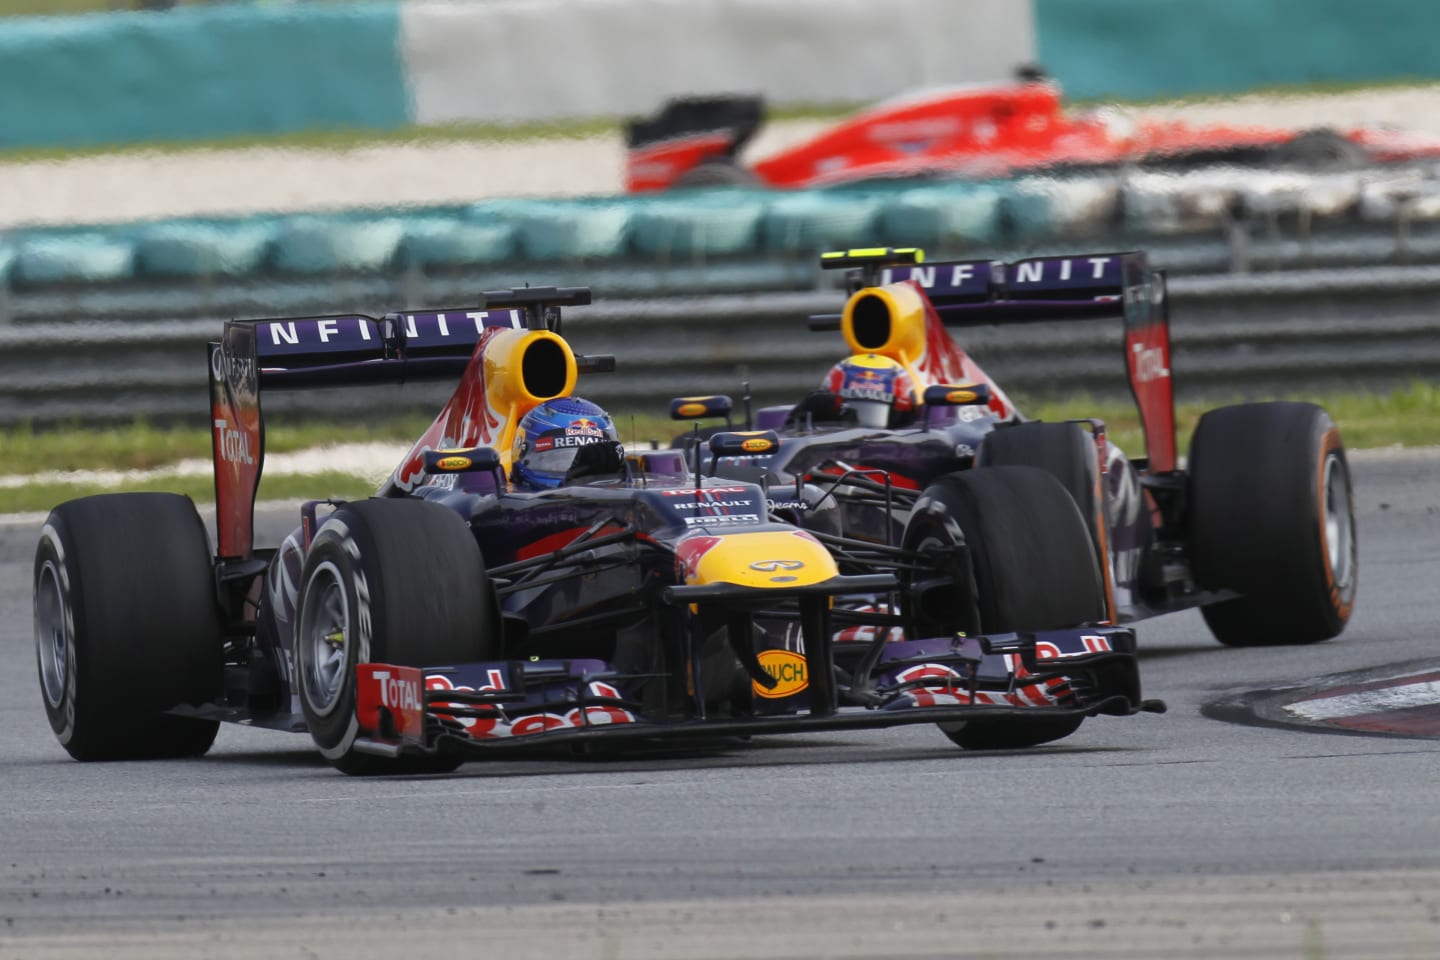 Sepang, Kuala Lumpur, Malaysia
Sunday 24th March 2013
Sebastian Vettel, Red Bull RB9 Renault, leads